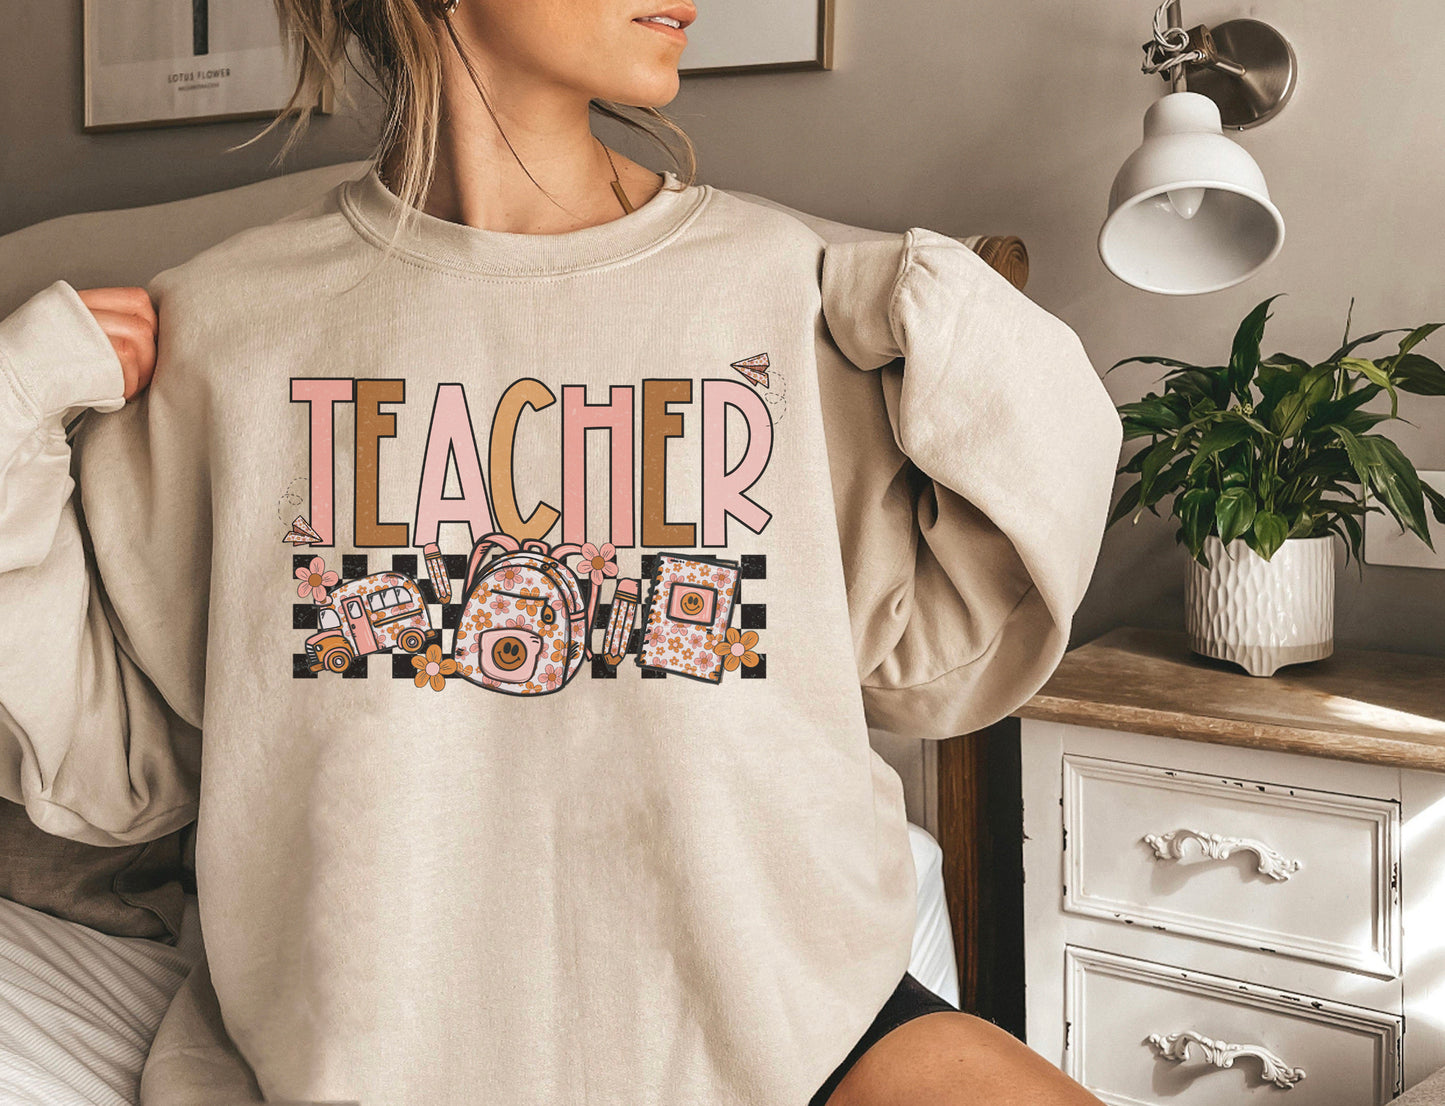 Retro Teacher Back To School Sweatshirt